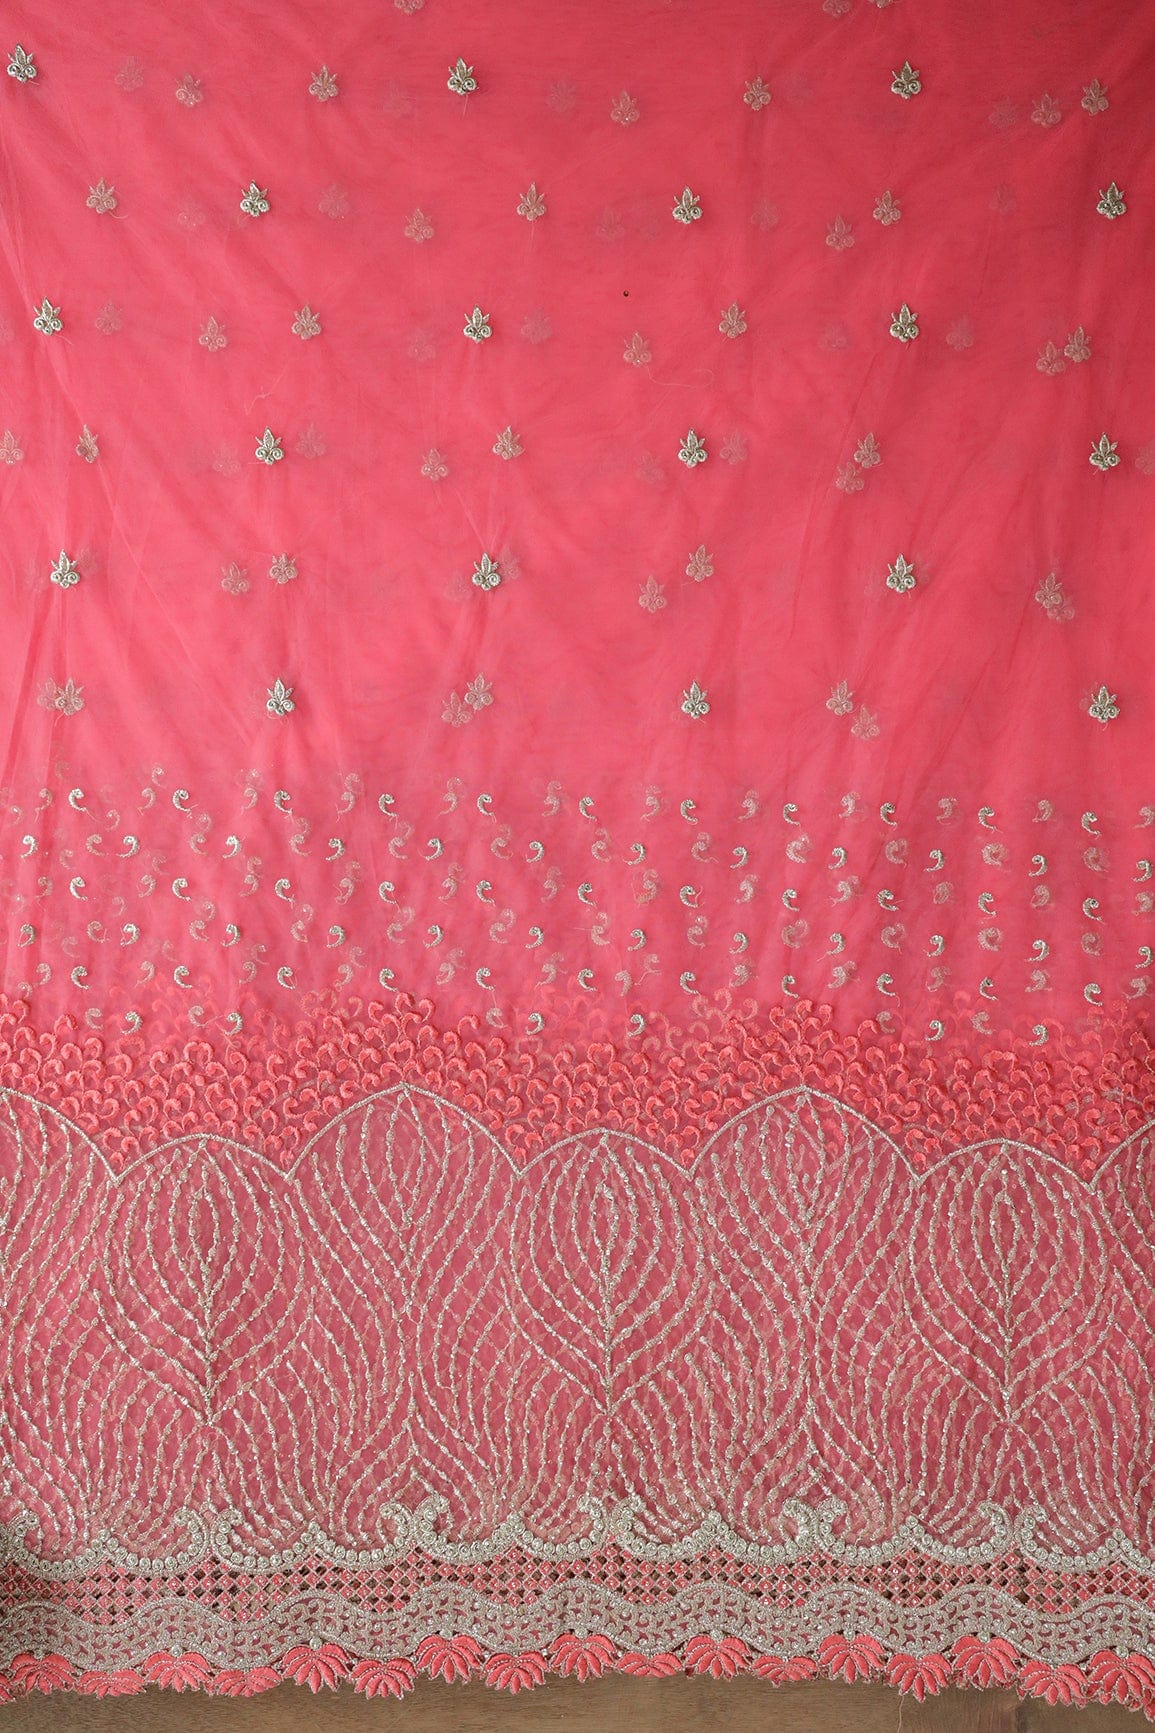 doeraa Embroidery Fabrics Big Width''56'' Gajri Pink Thread With Zari Traditional Embroidery Work On Gajri Pink Soft Net Fabric With Border